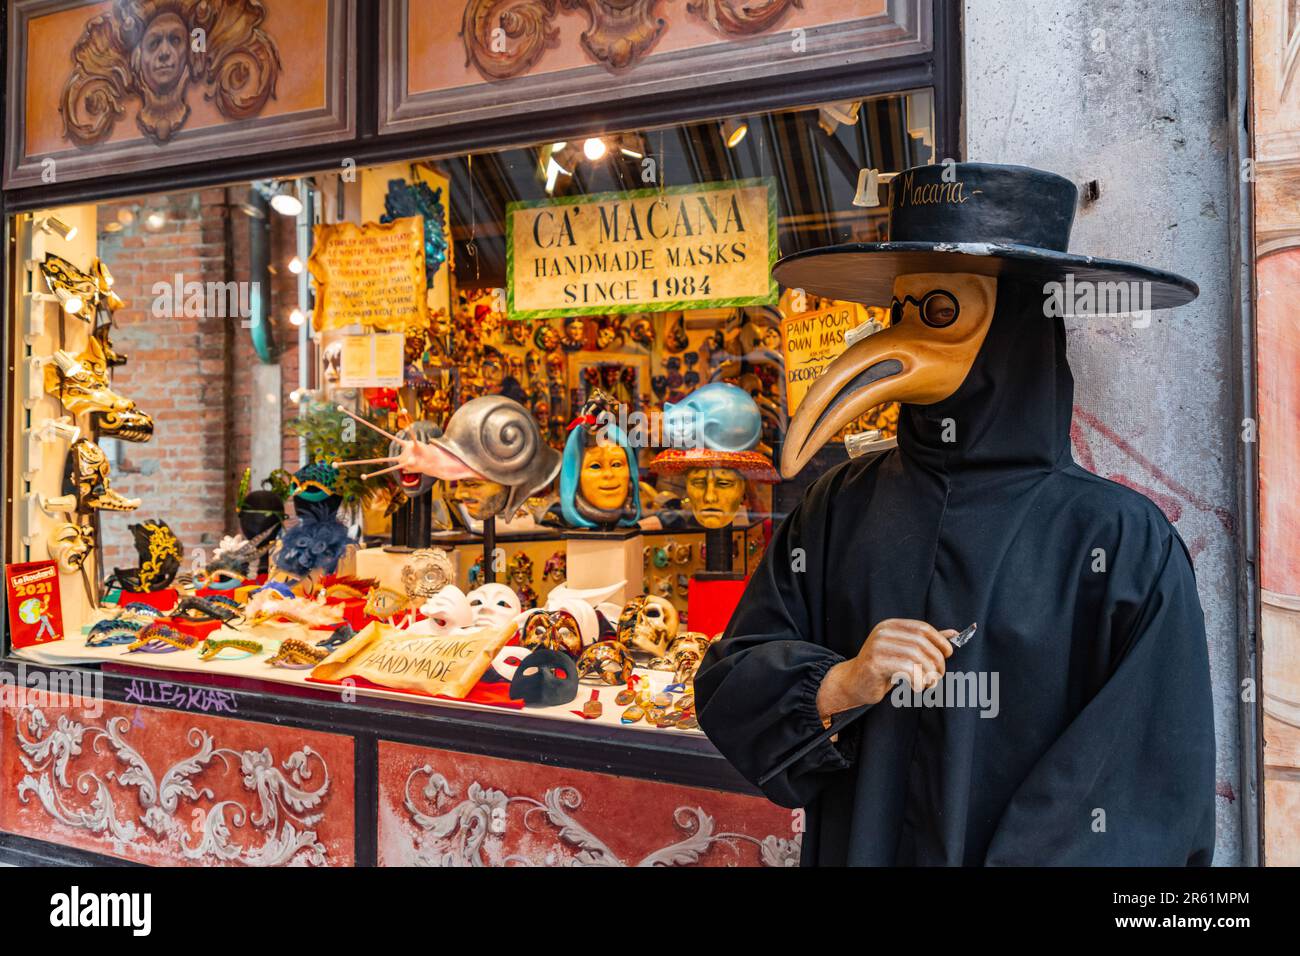 Venezia, Italia - 2 aprile 2022: Varietà di maschere veneziane tradizionali vendute presso uno stand di souvenir a venezia. Foto Stock